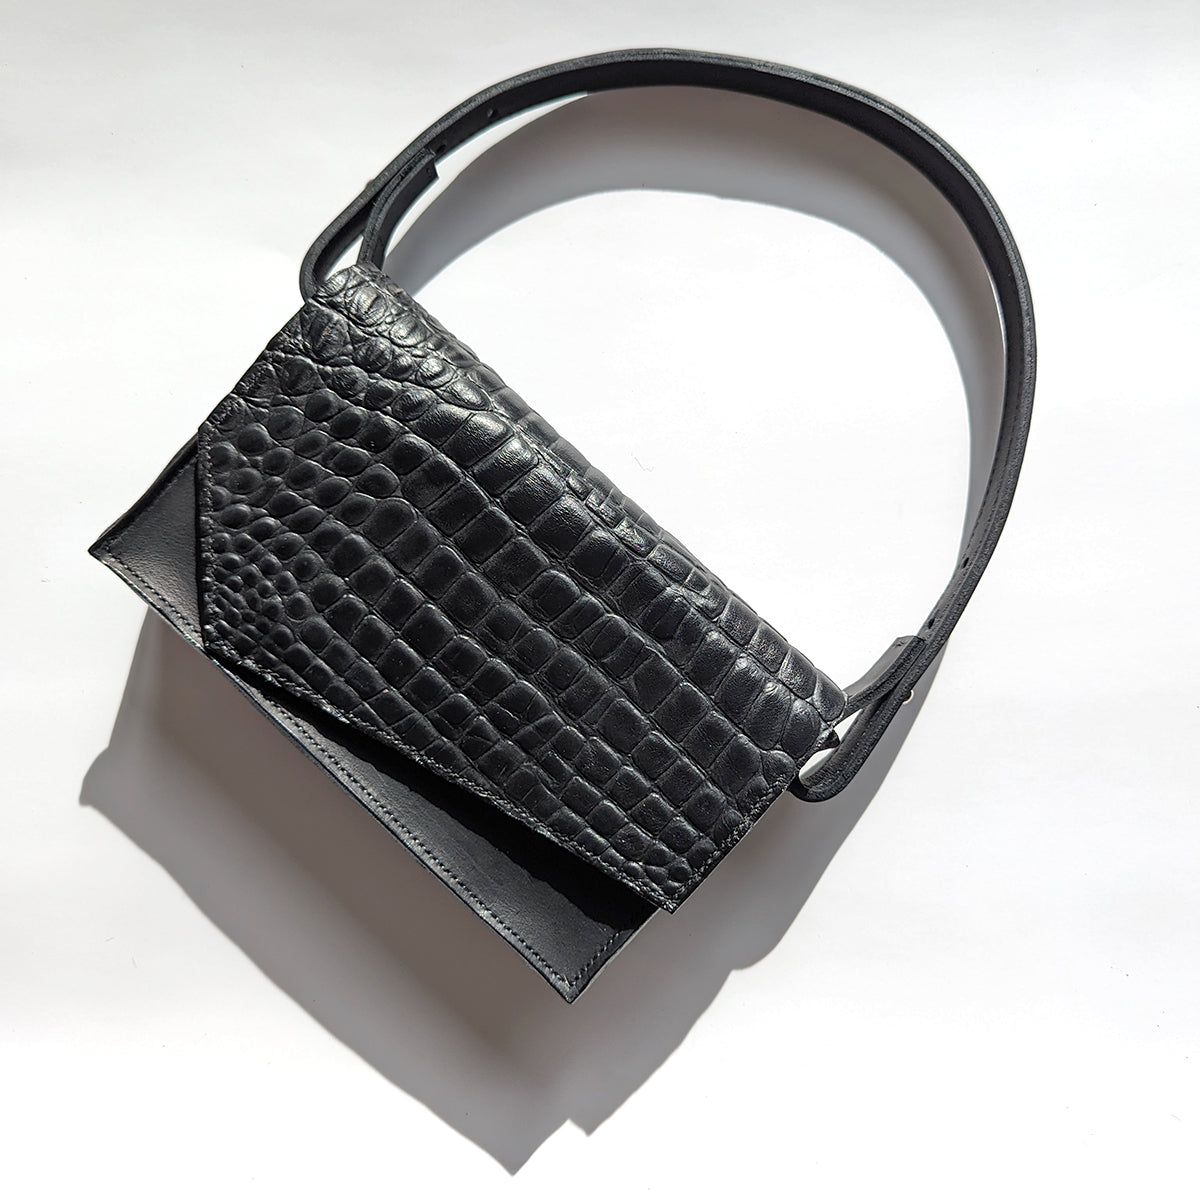 Handsewn Two-Tone Handbag, Black Croc/Matte Black Leather